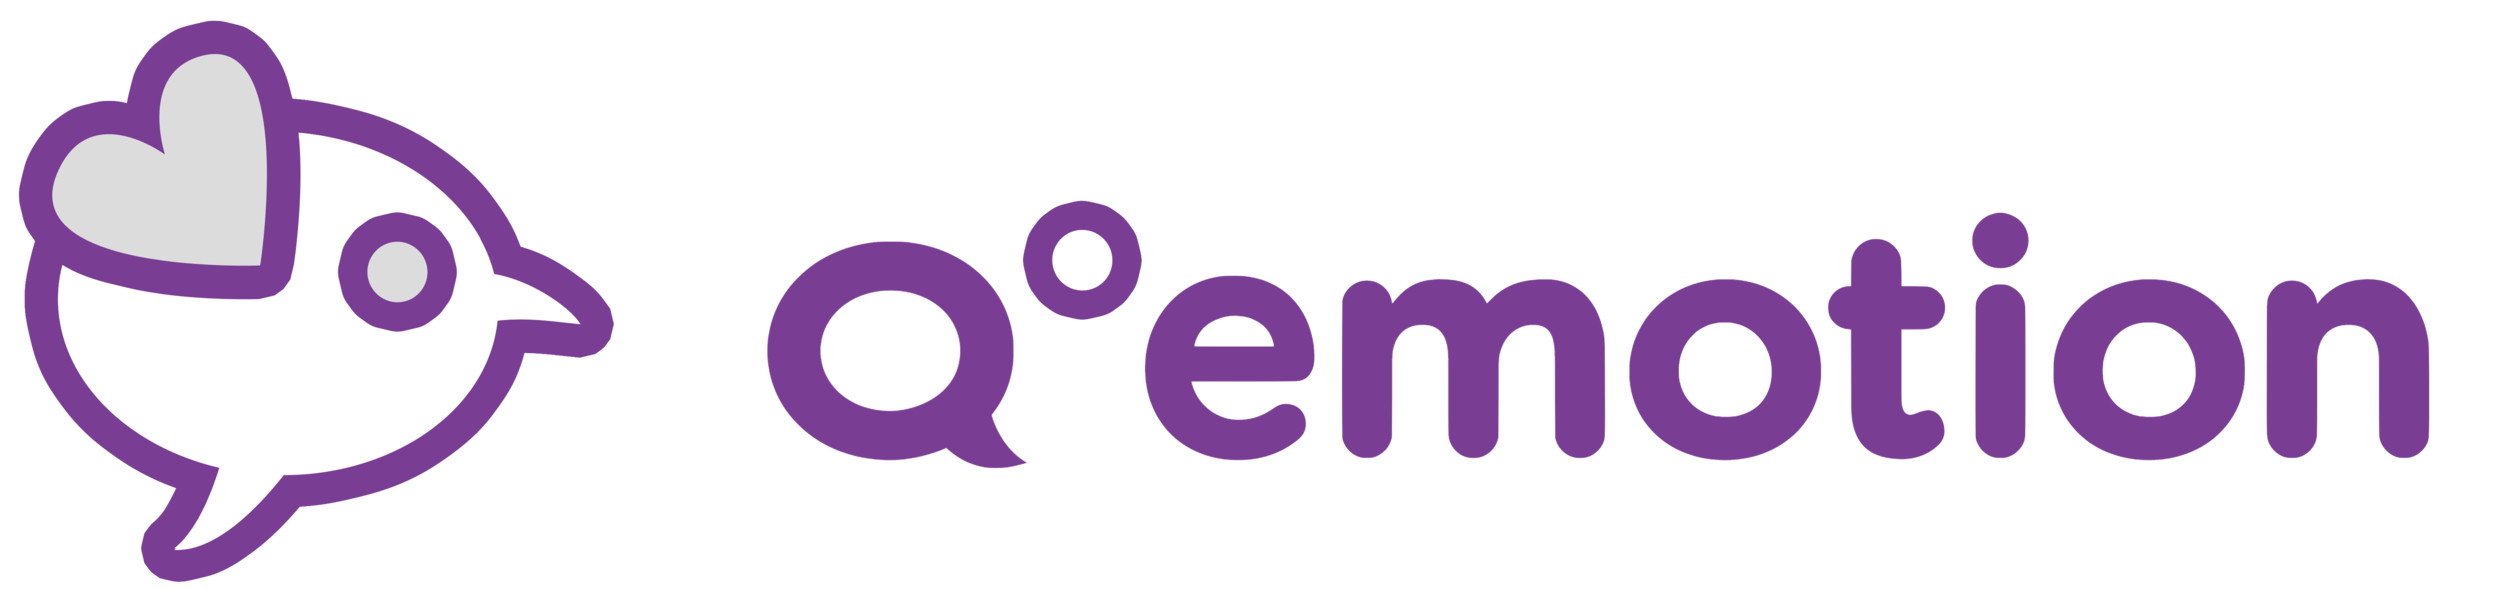 Logo-Q°emotion.png